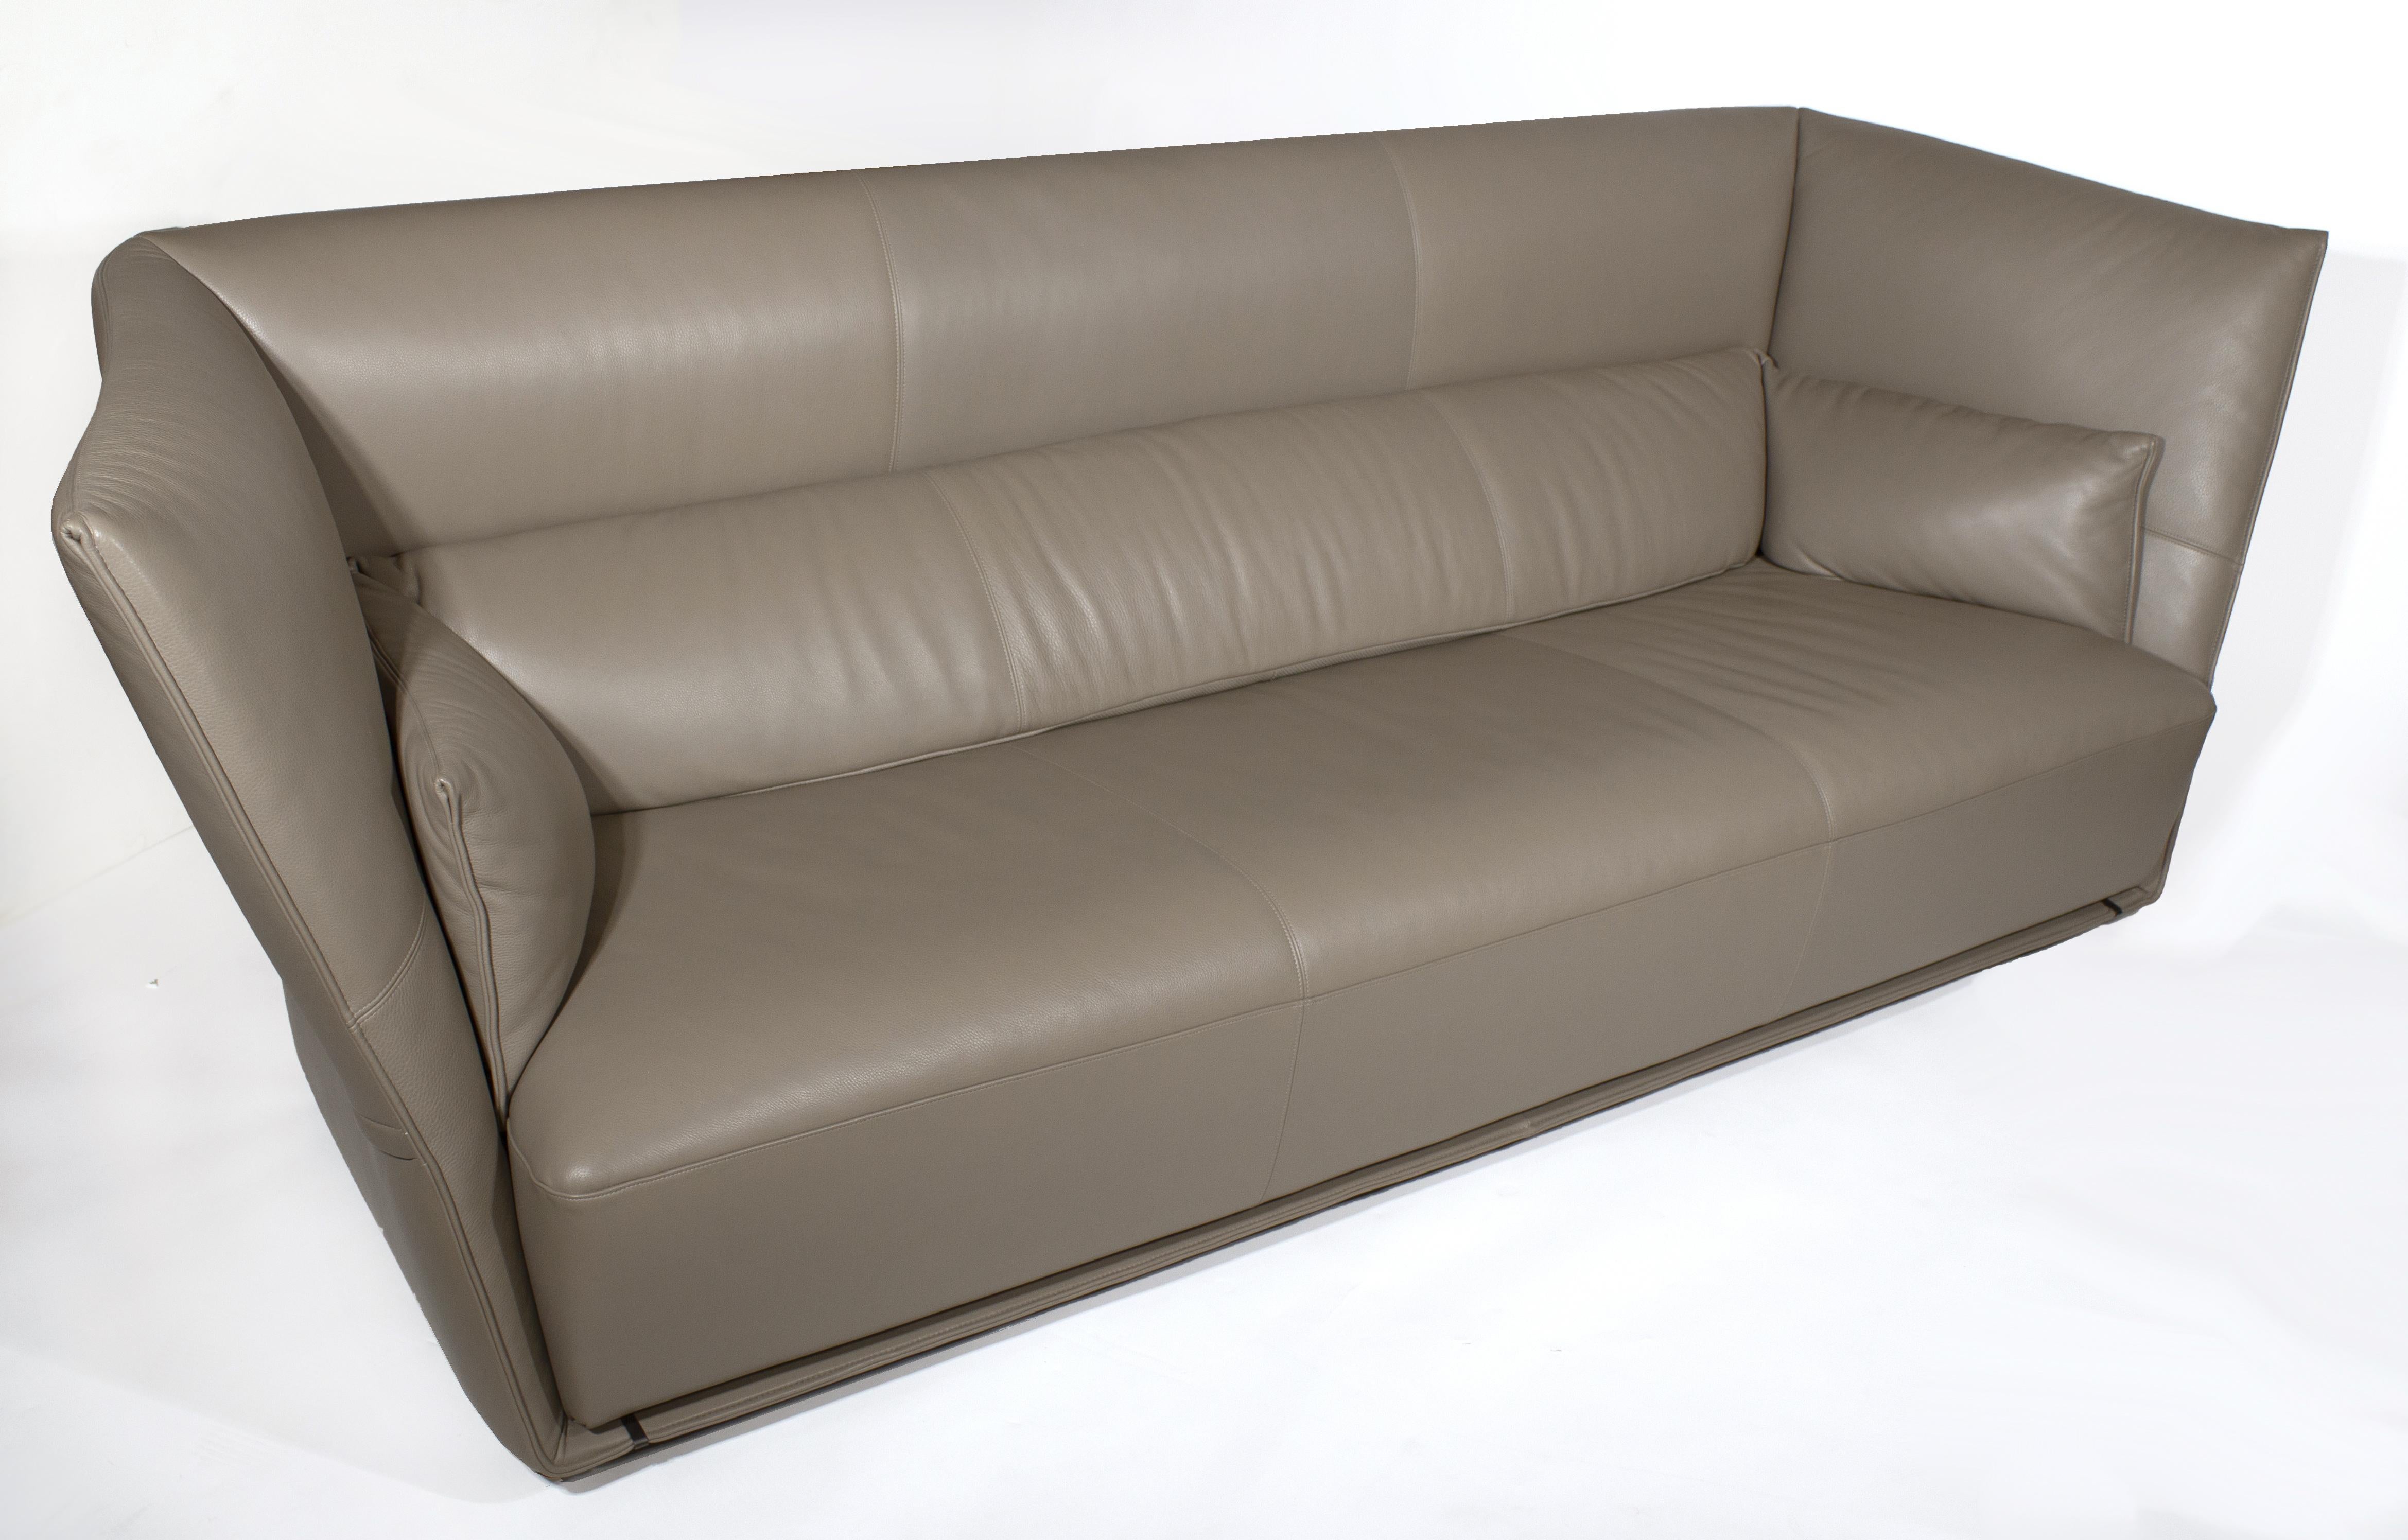 Paltrona Frau 'Almo' Modern Leather Sofa Designed by Garcia Cumini In Good Condition For Sale In Dallas, TX